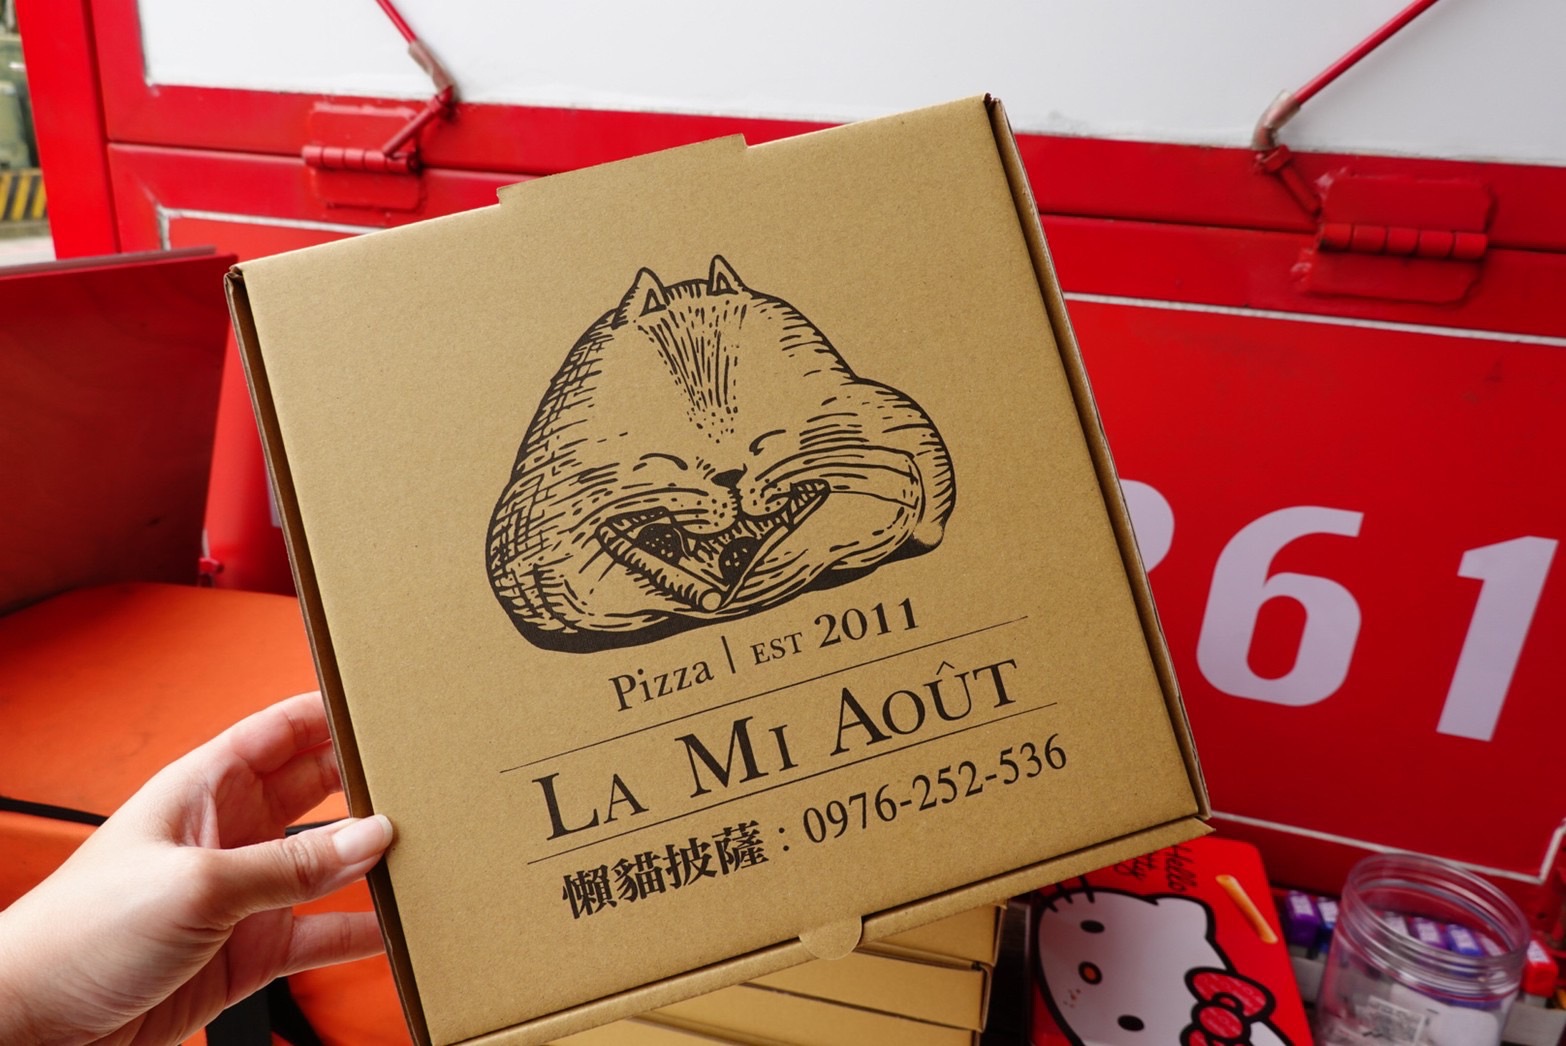 La Mi-août 懶貓披薩,懶貓披薩,晶湛,桃園美食